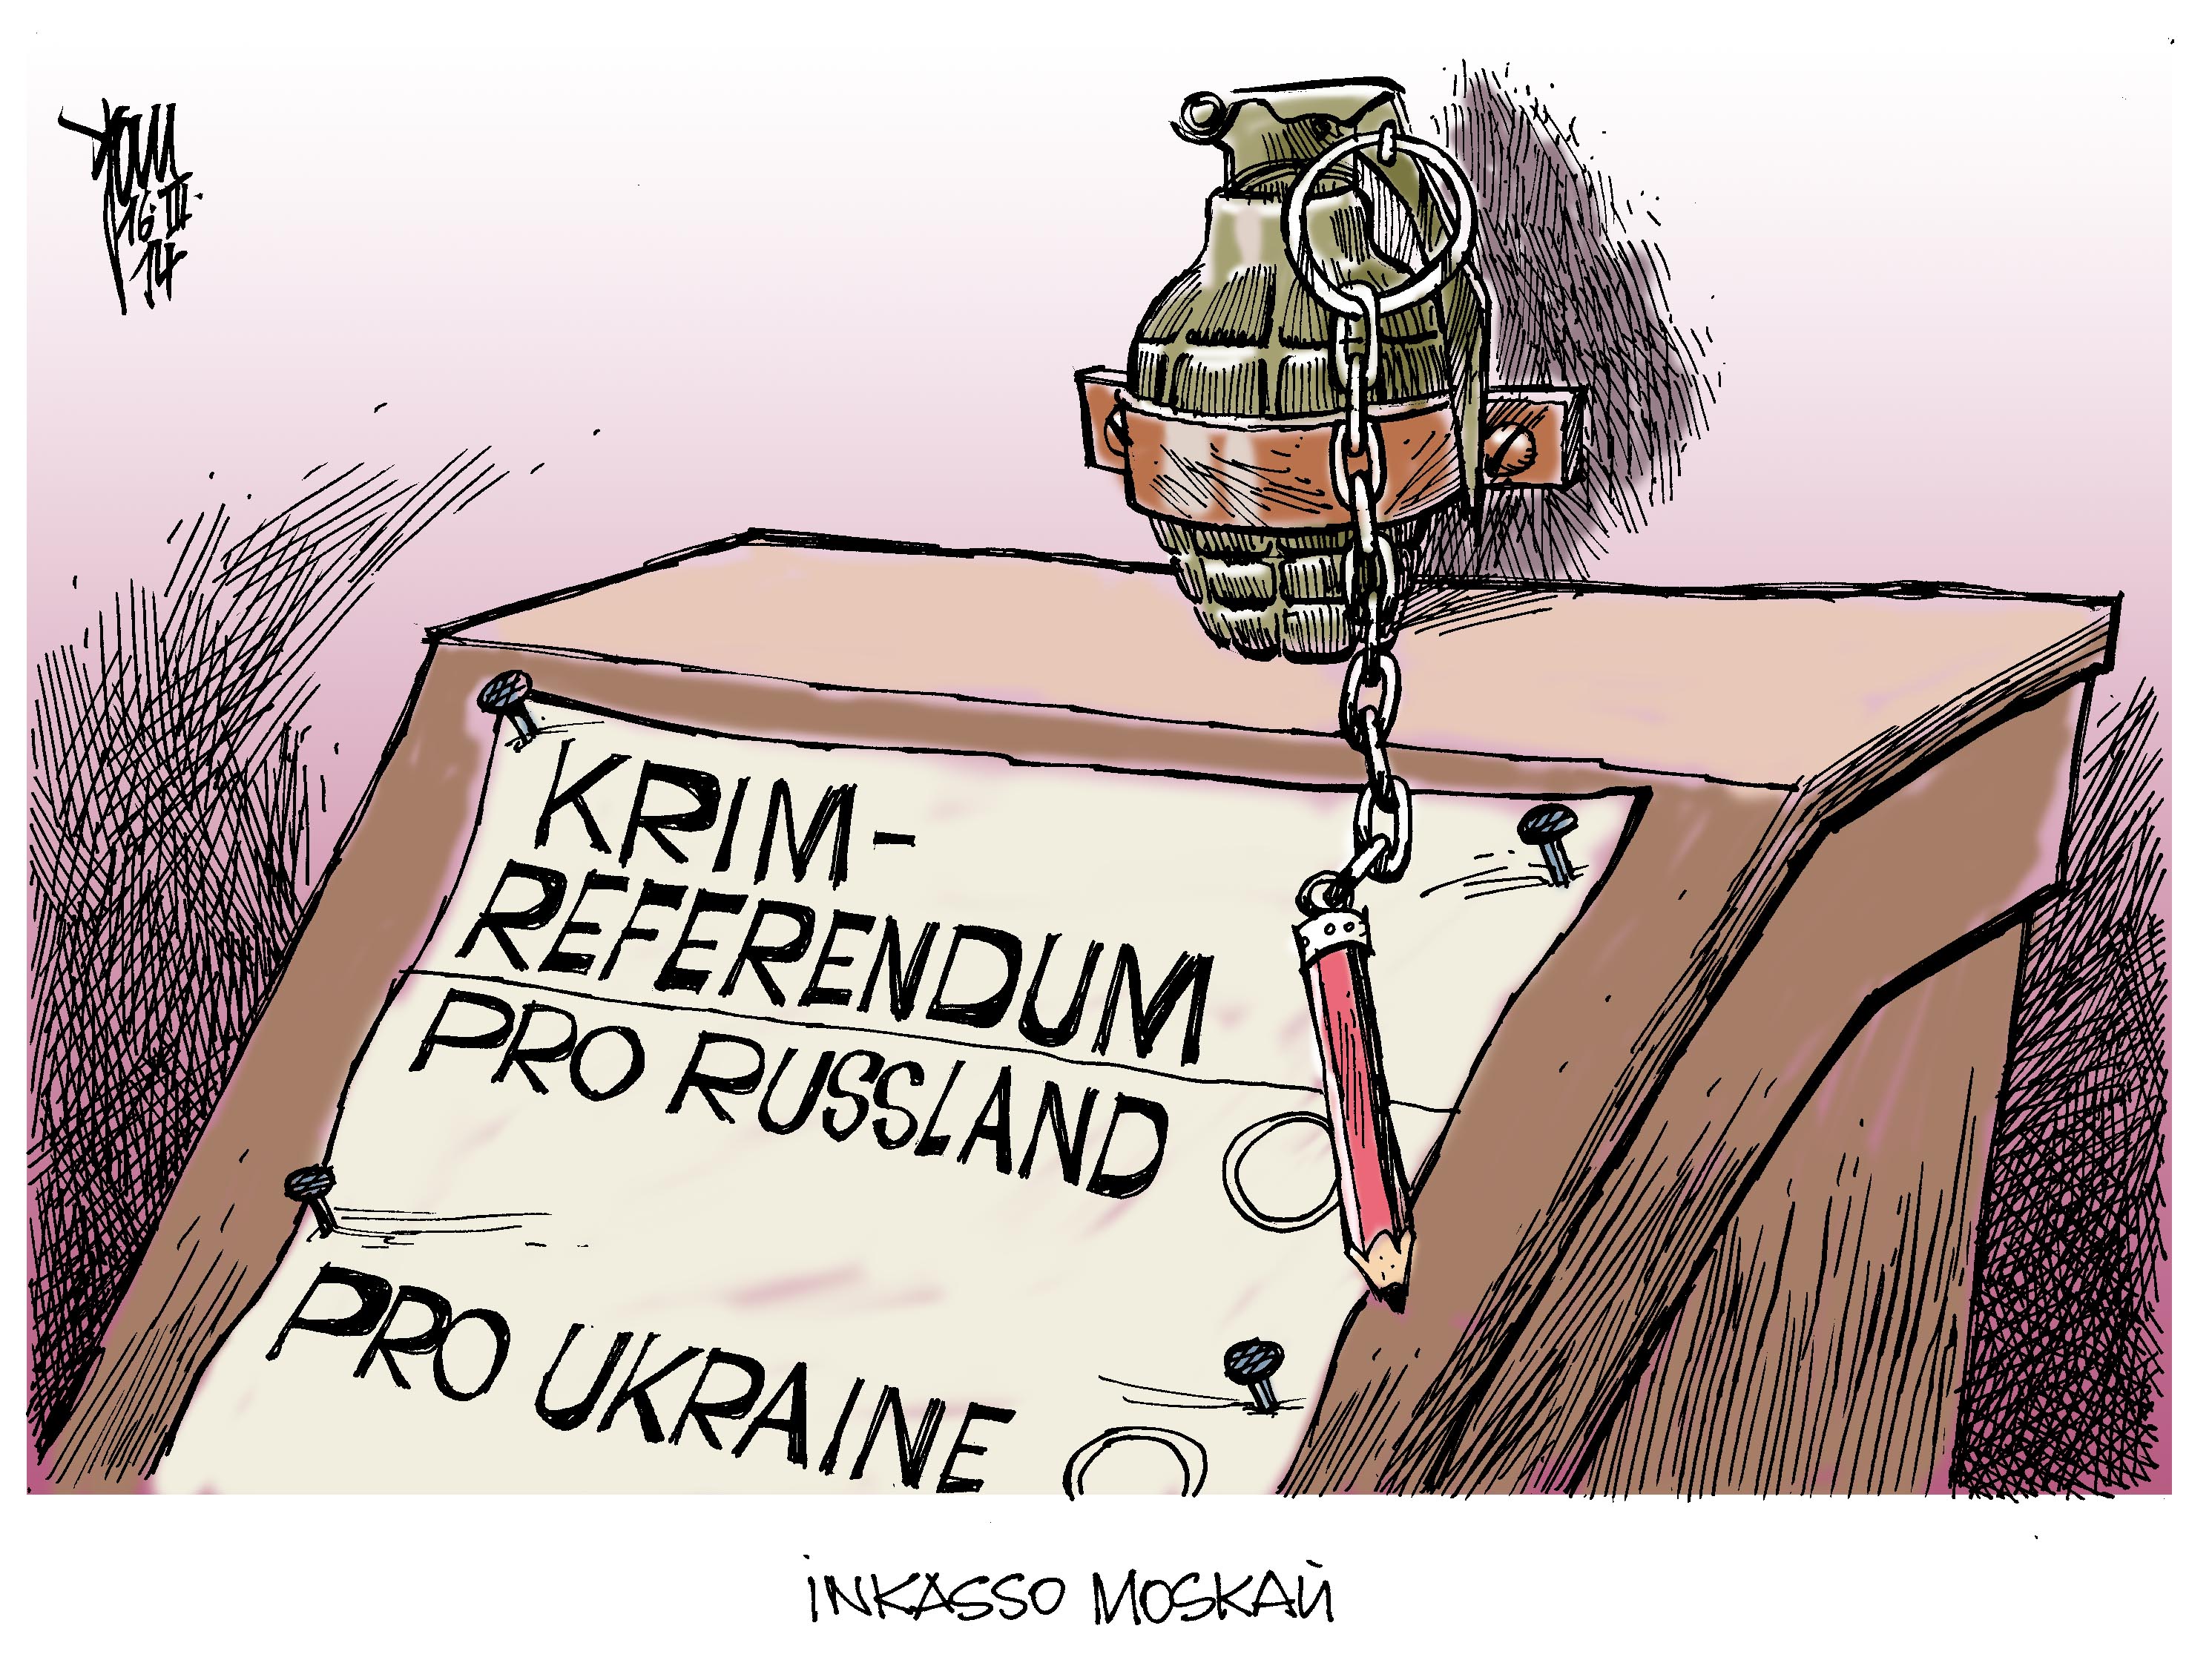 http://janson-karikatur.de/wp-content/uploads/2014/03/Krim-Referendum-14
03-16-rgb.jpg  